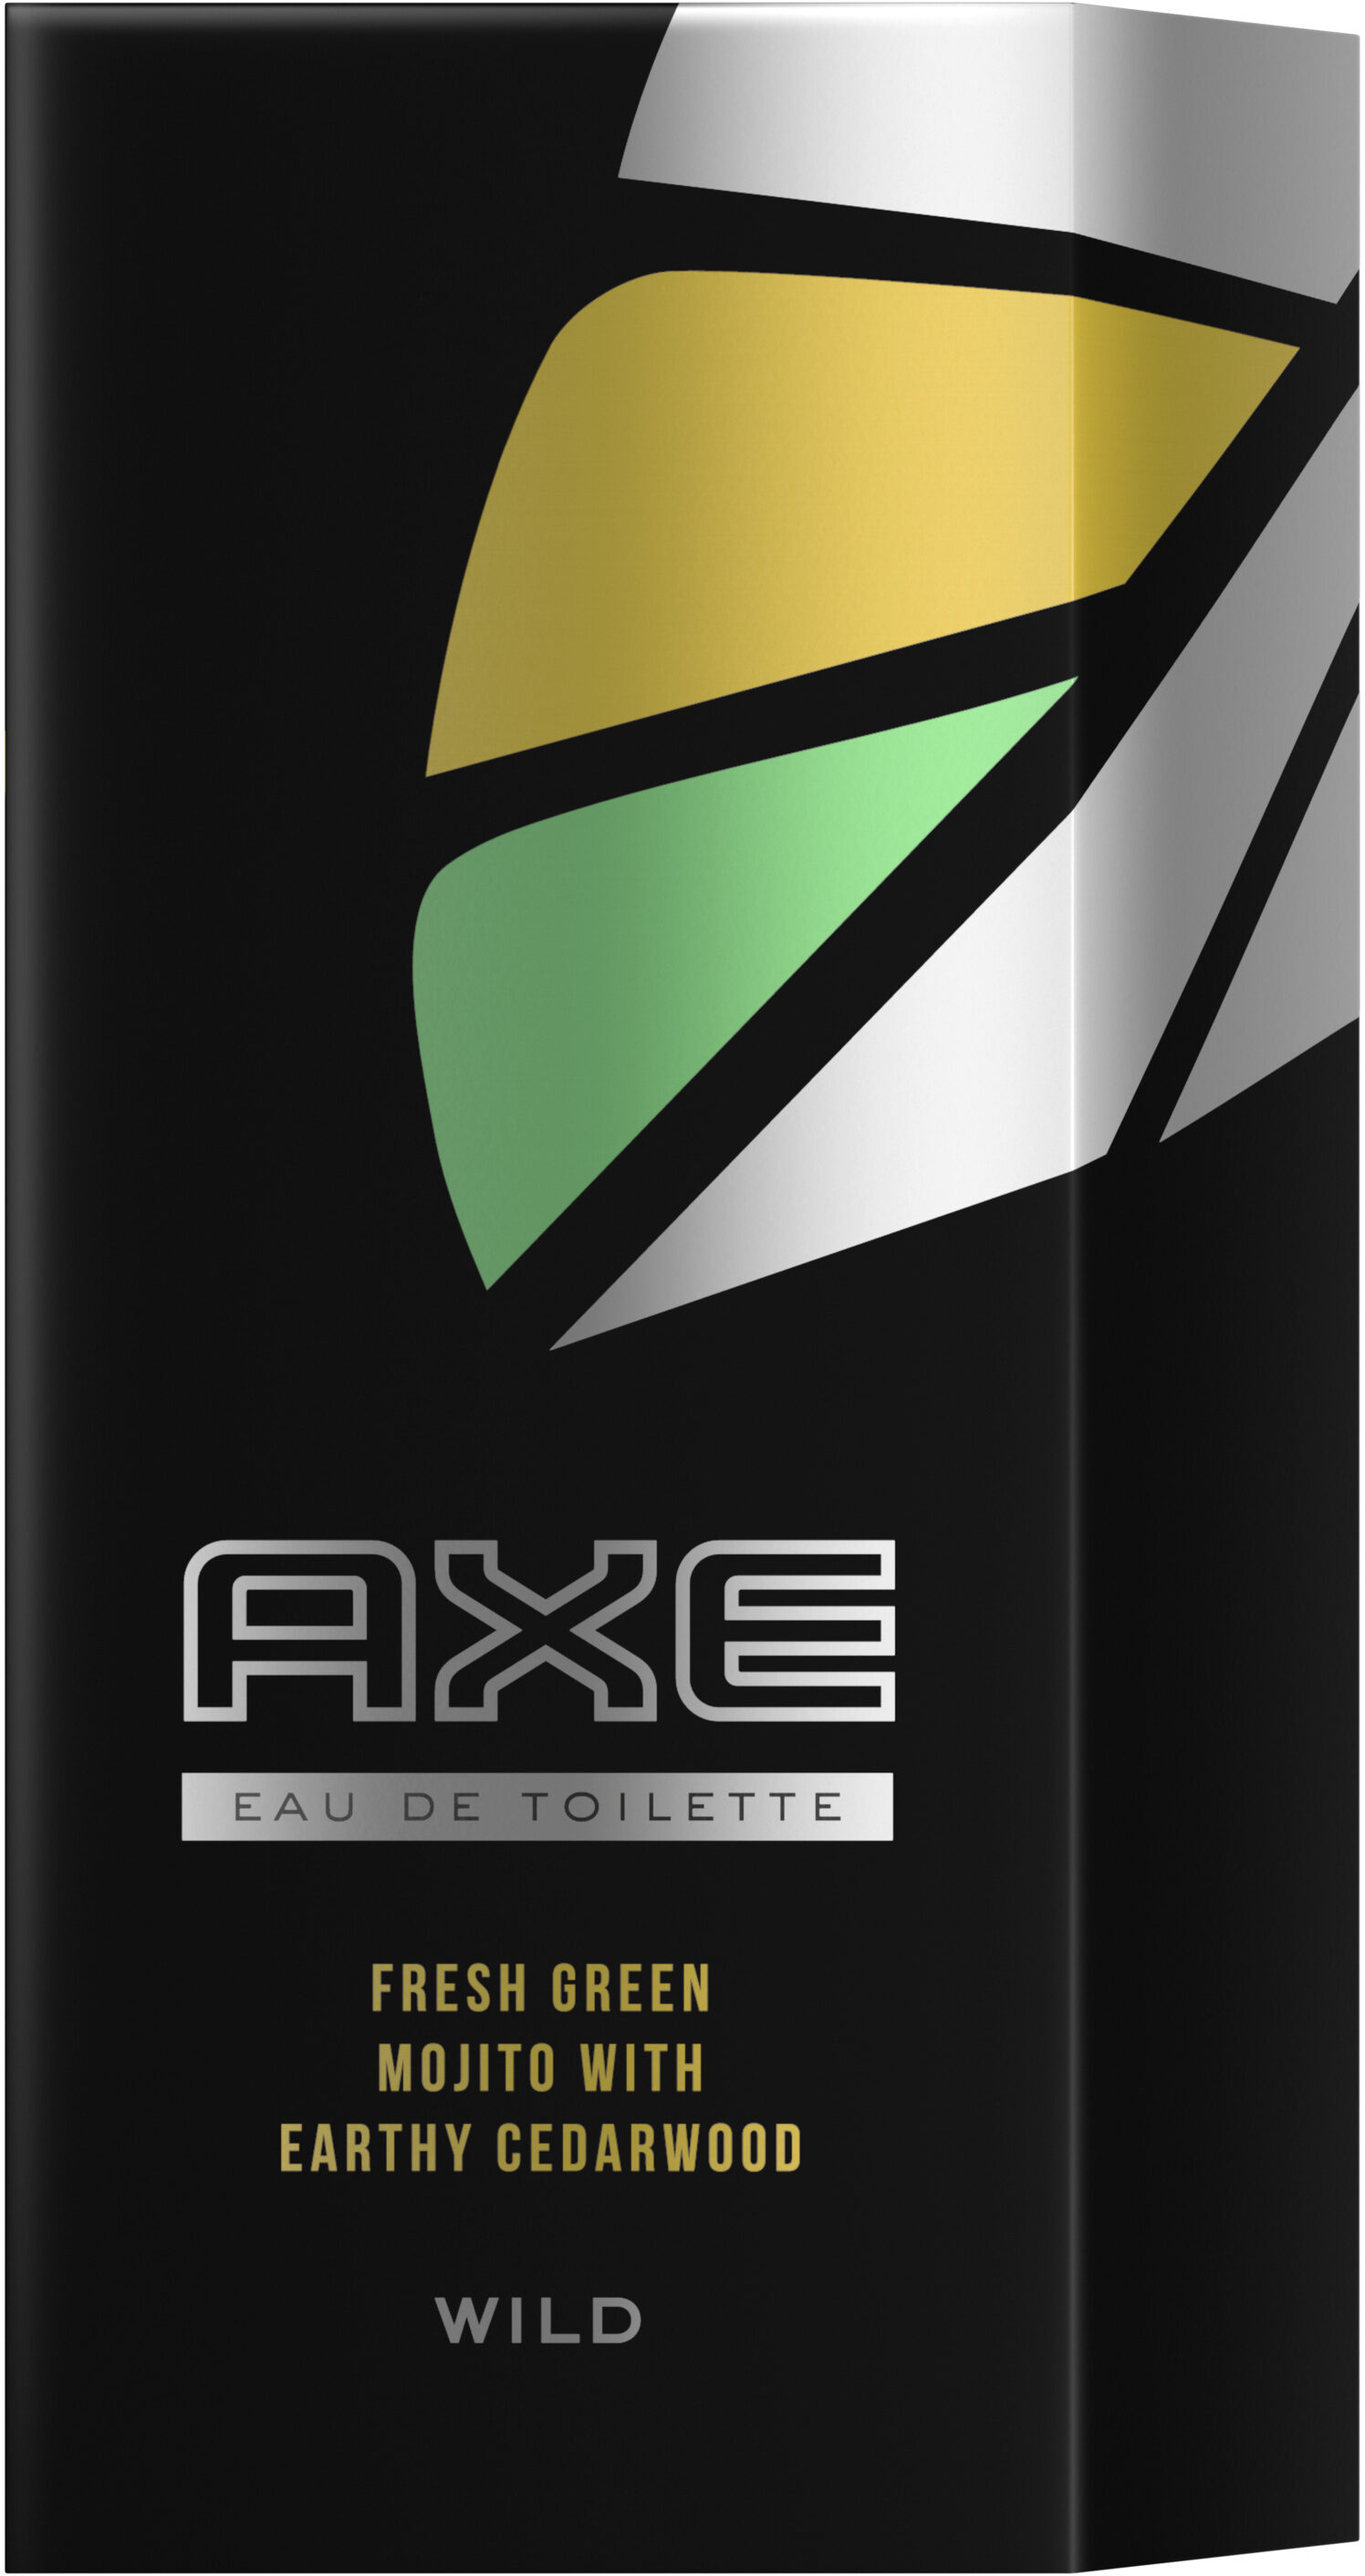 AXE Eau De Toilette Wild 100ml - Product - fr